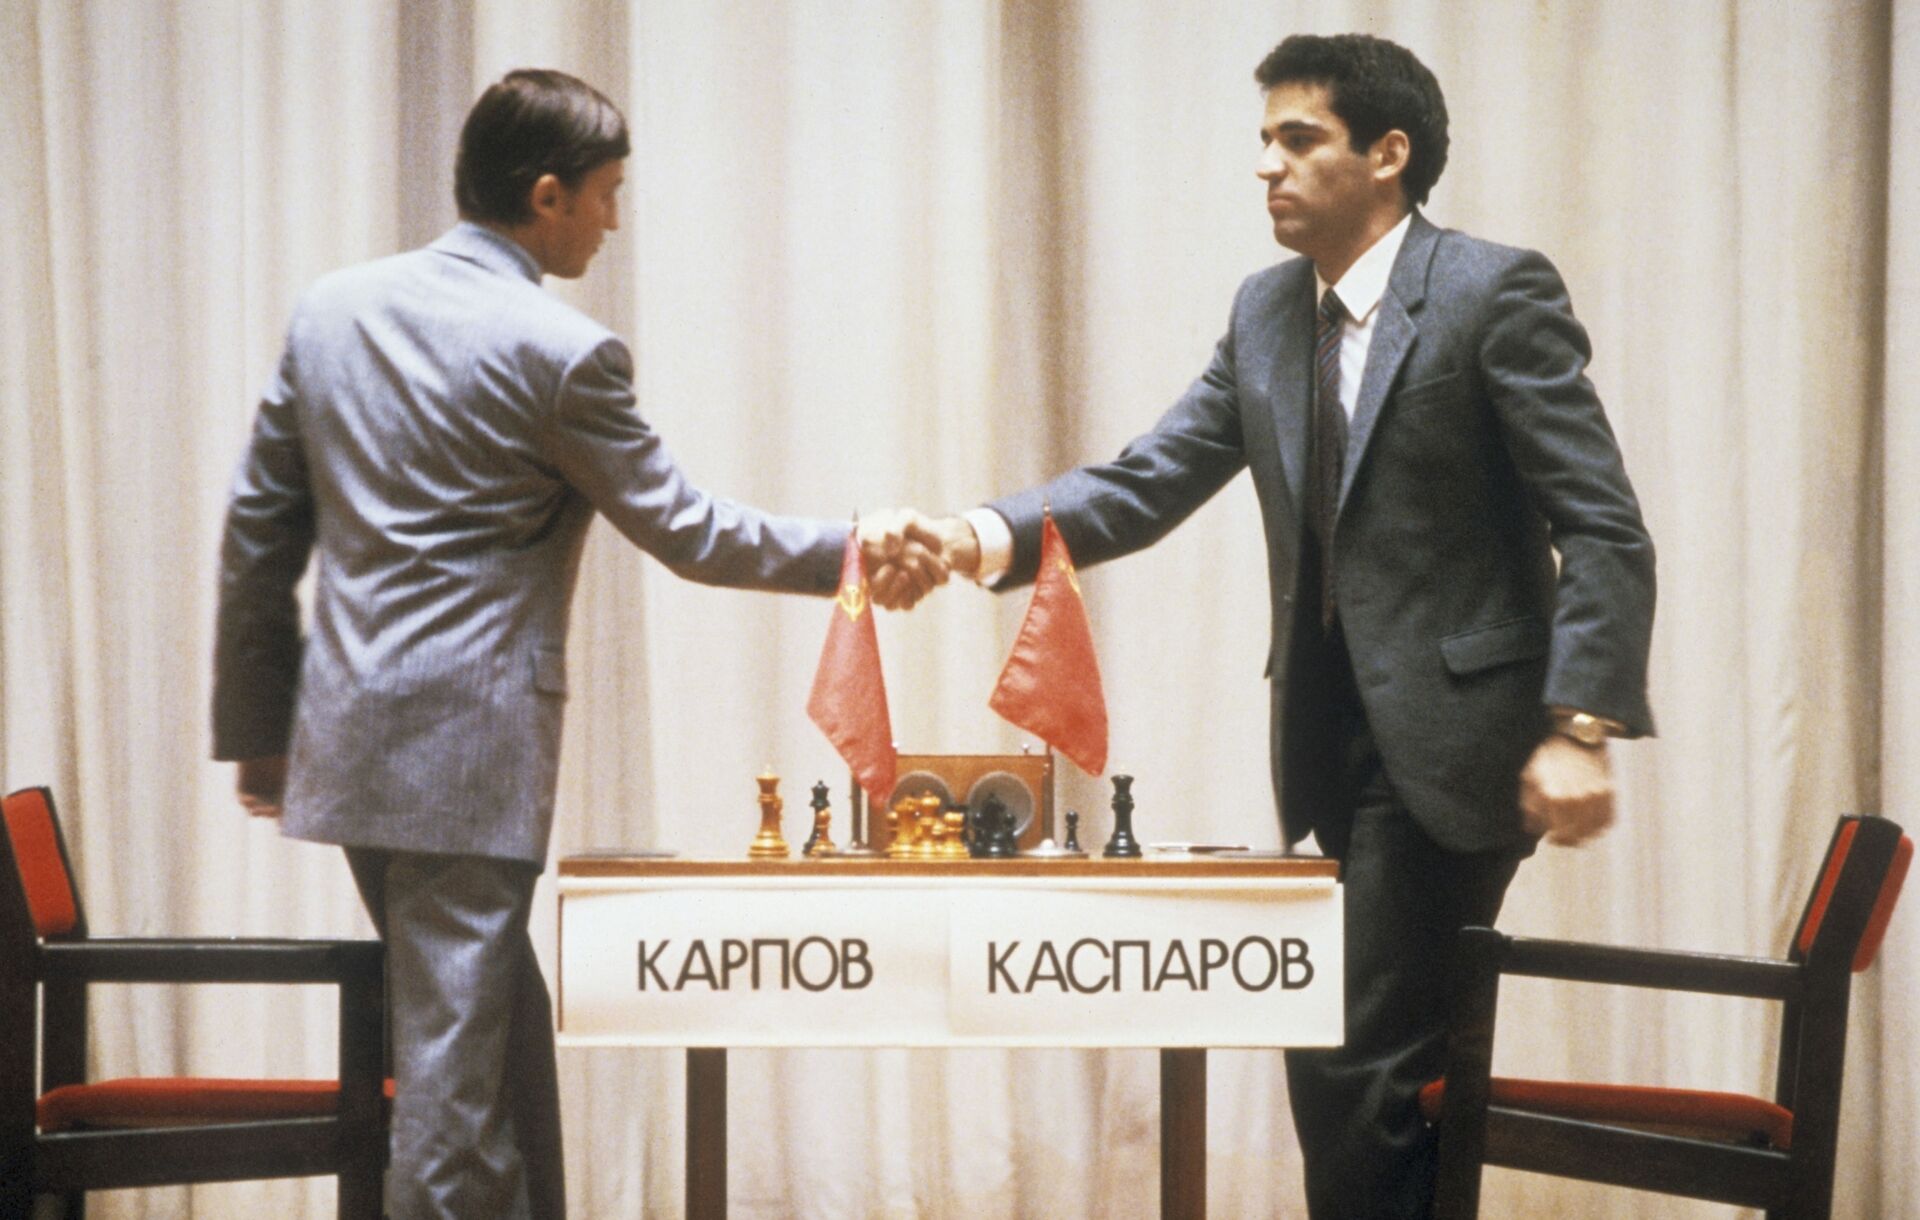 II матч за звание чемпиона мира по шахматам между Гарри Каспаровым и Анатолием Карповым (слева), 1985 год. Каспаров выиграл со счетом 13:11 - Sputnik Беларусь, 1920, 29.06.2021